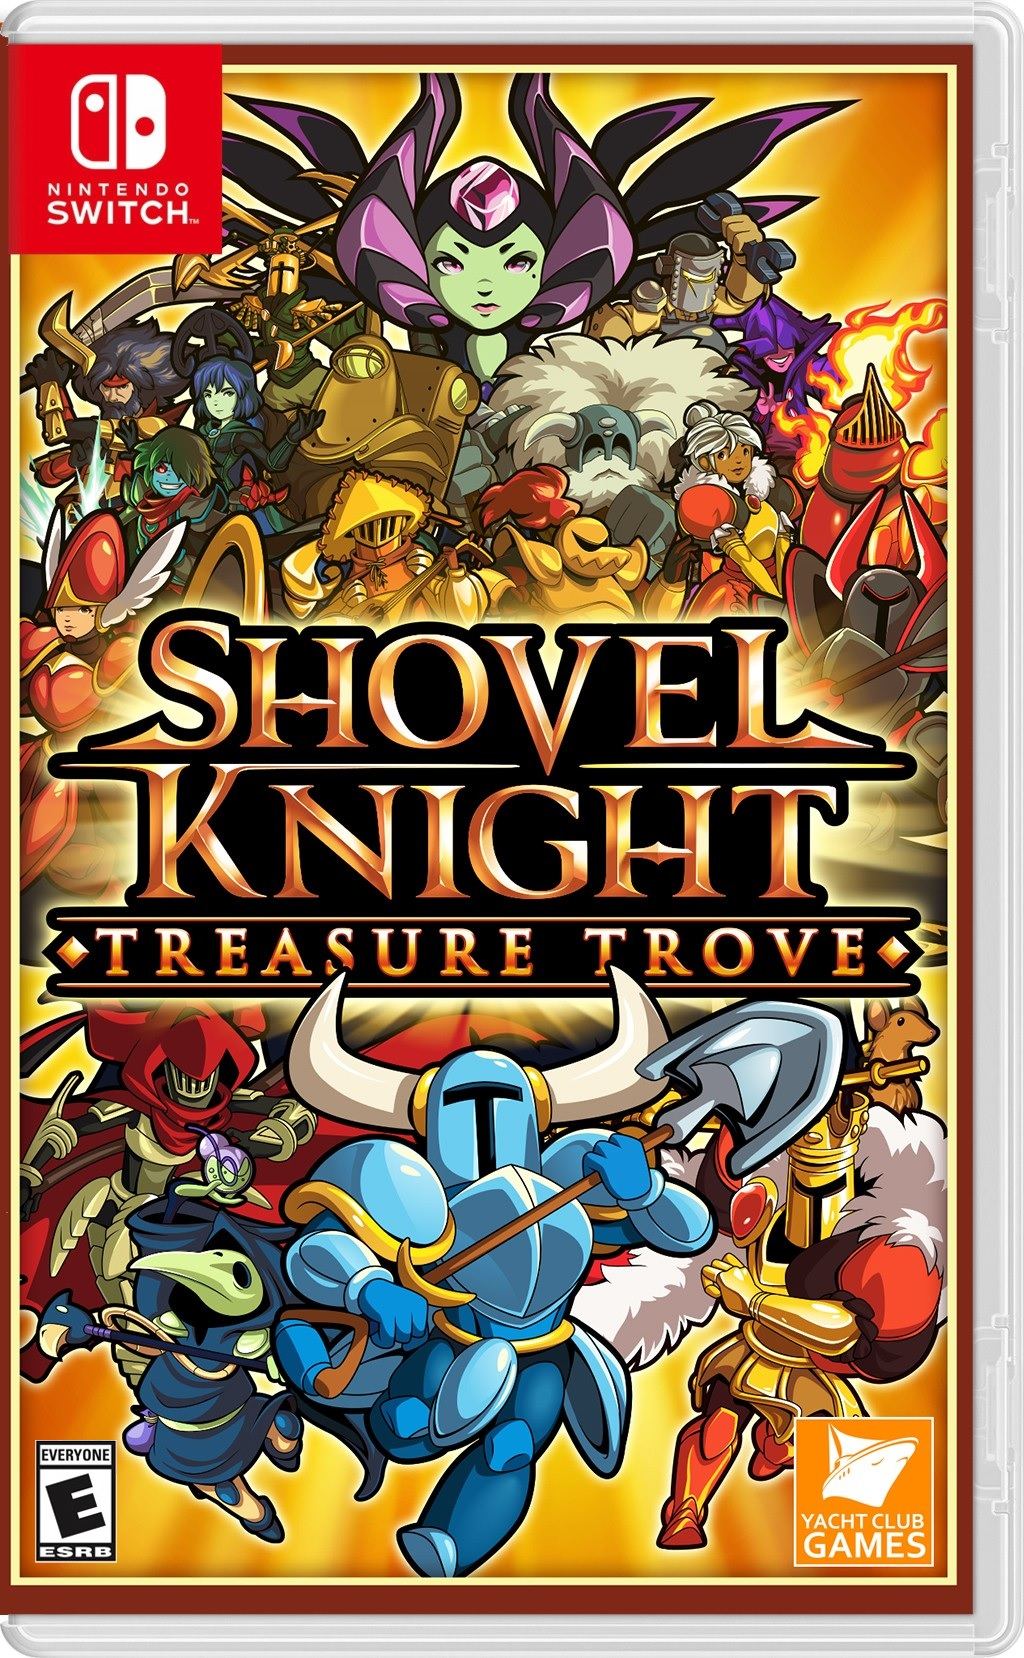 Shovel Knight Showdown for Nintendo Switch - Nintendo Official Site